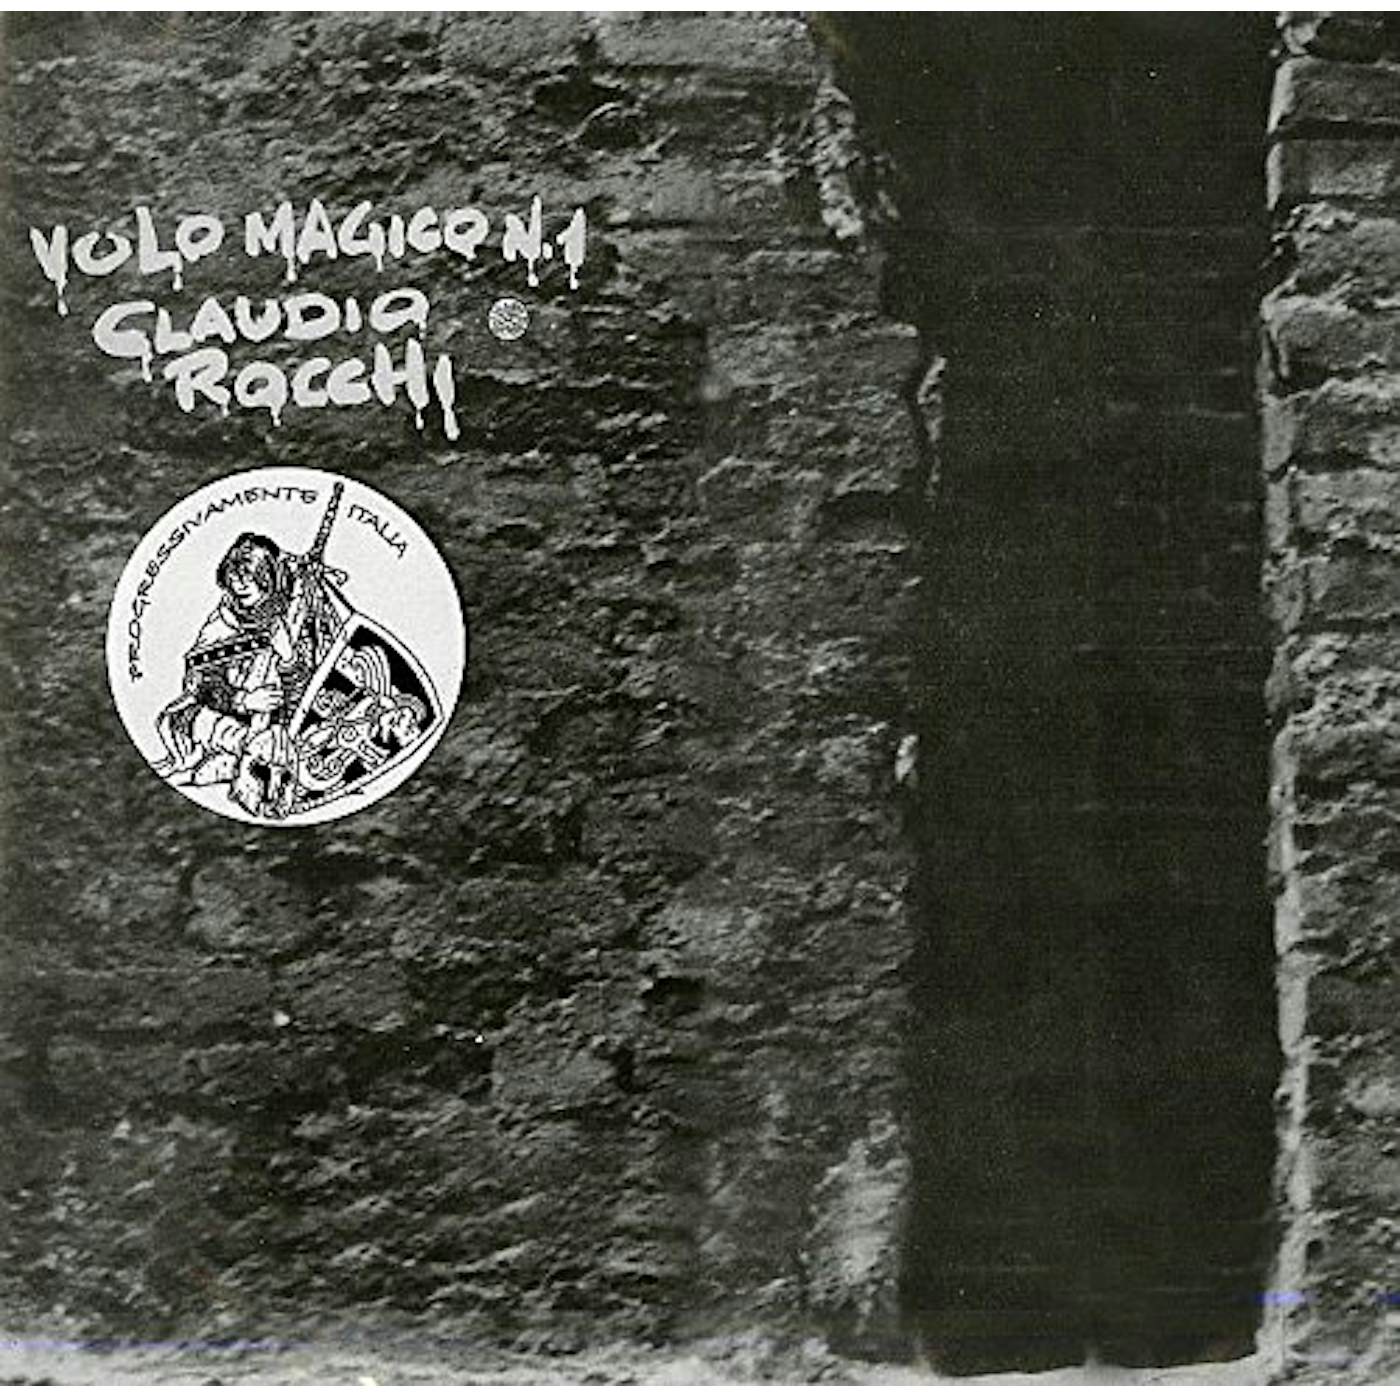 Claudio Rocchi VOLO MAGICO N.1 CD